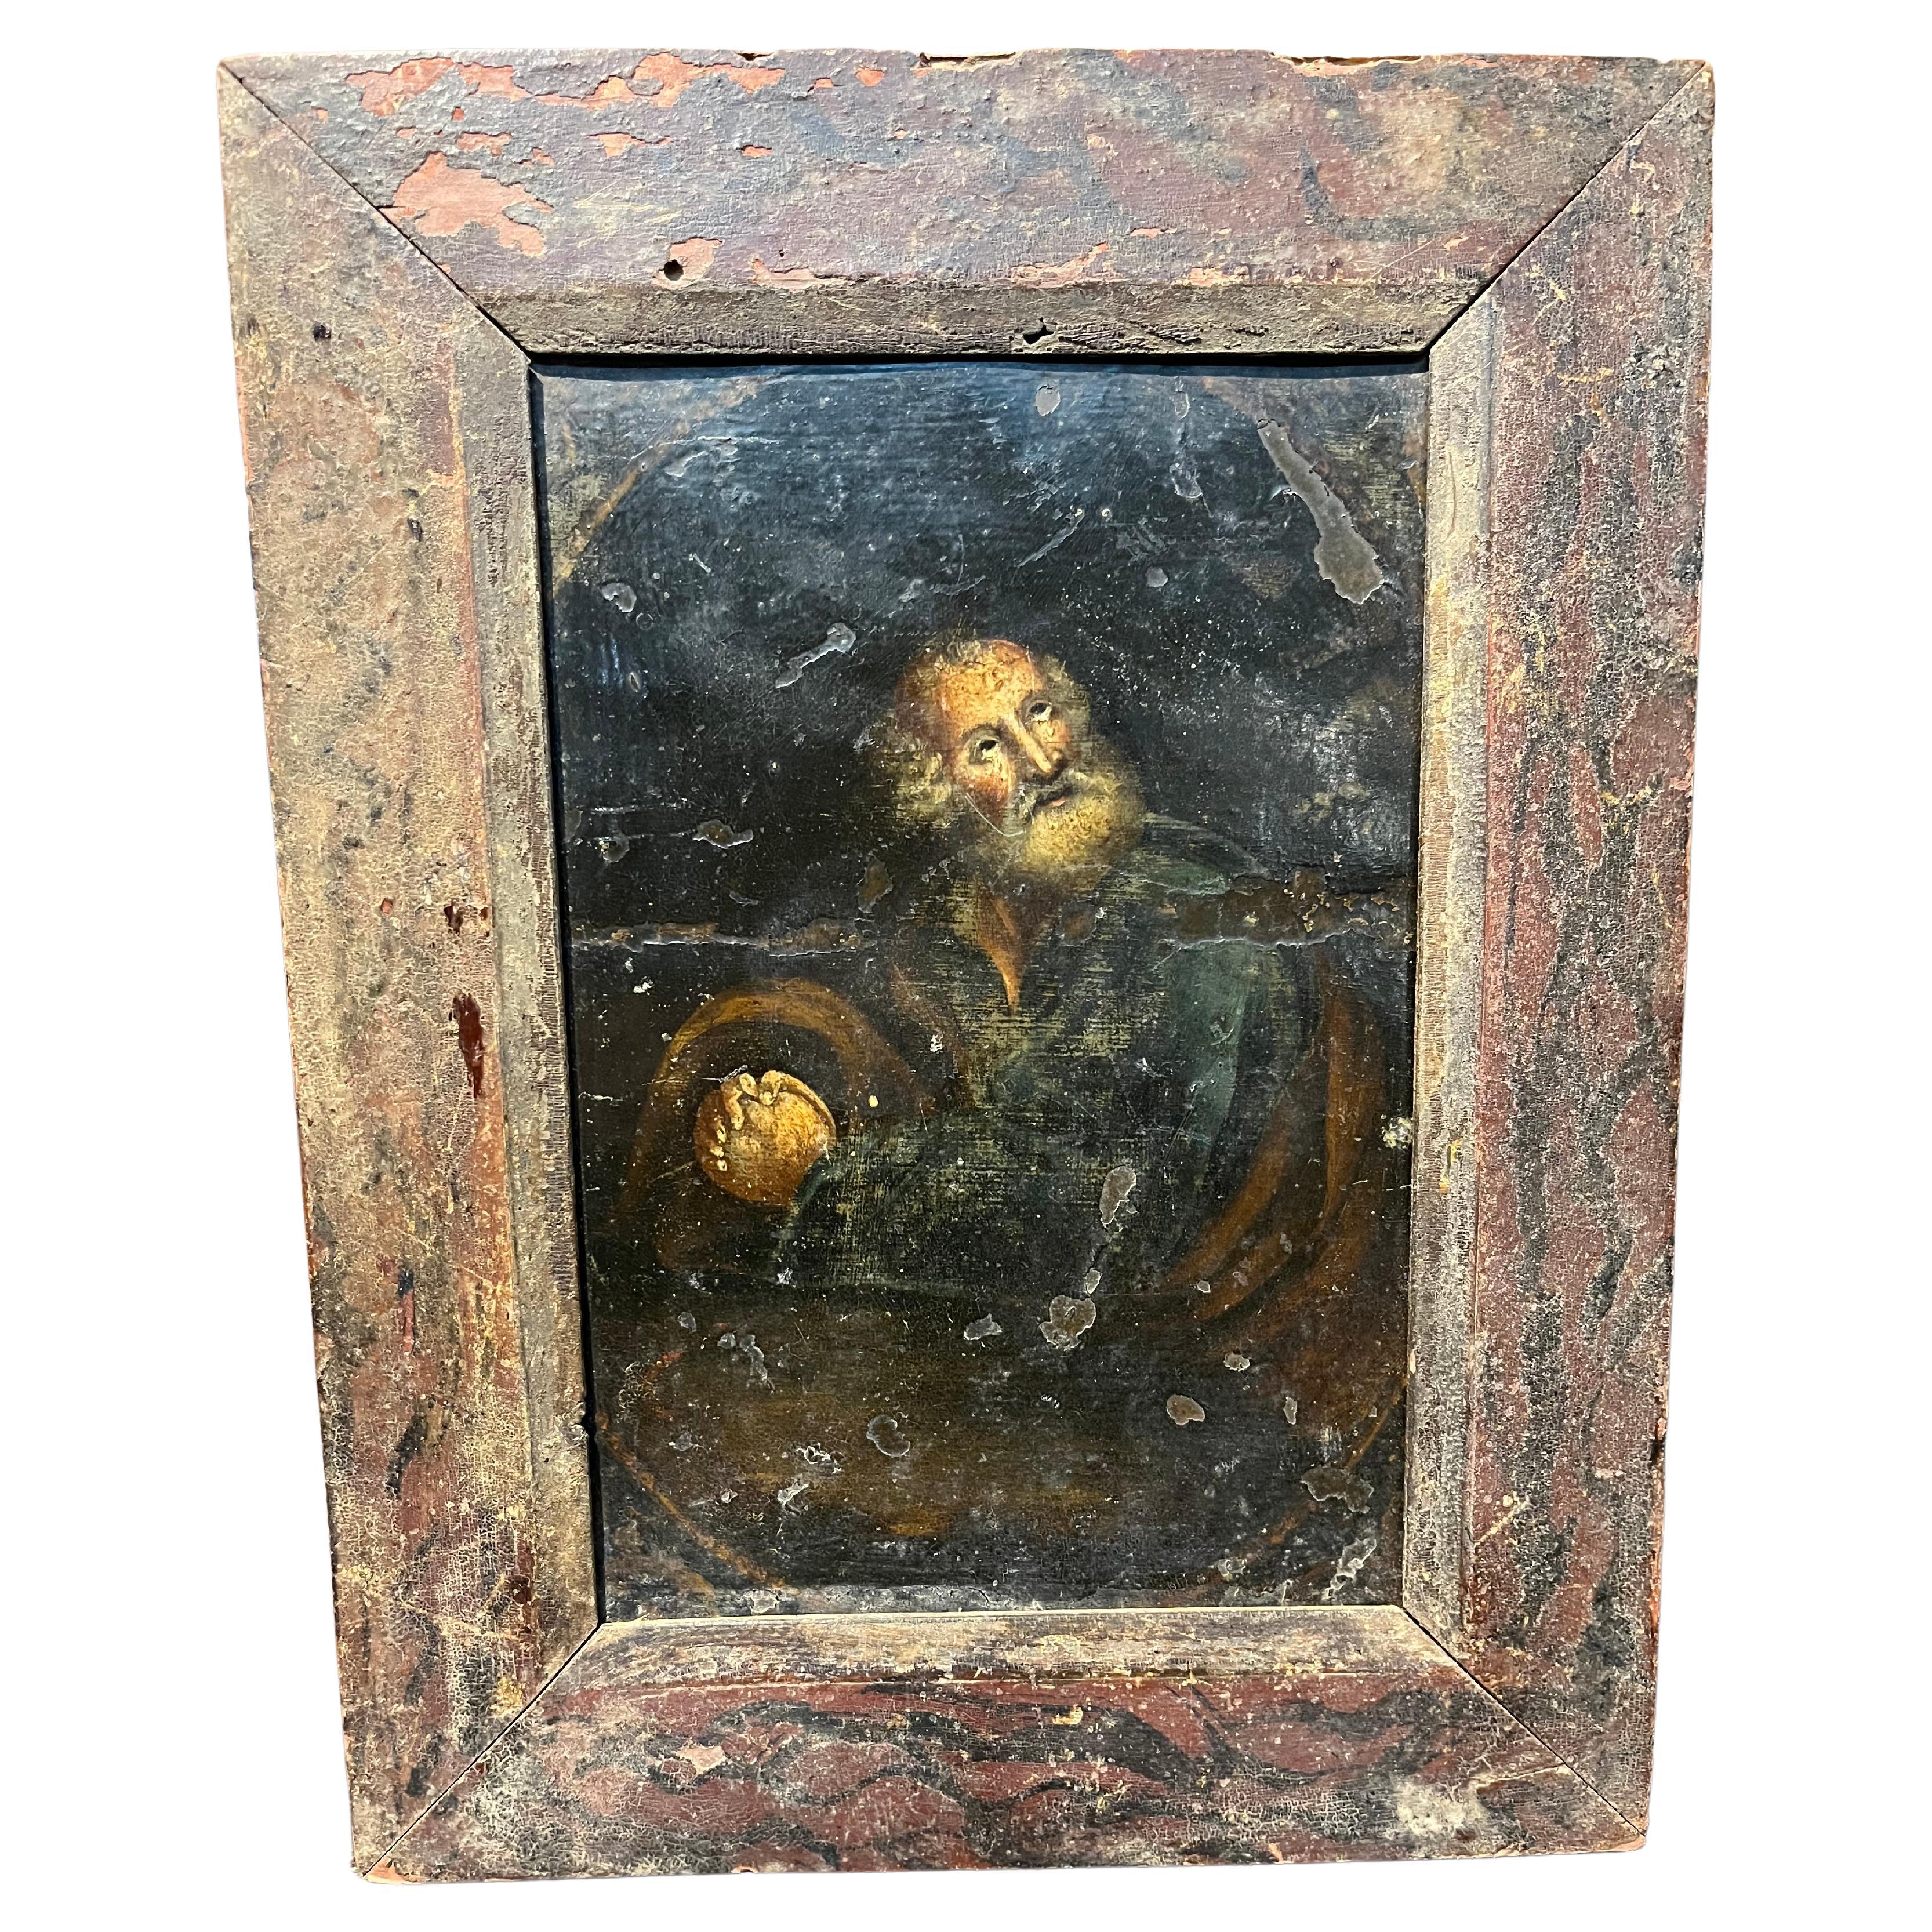 Pintura española al óleo sobre cobre del siglo XVII en venta